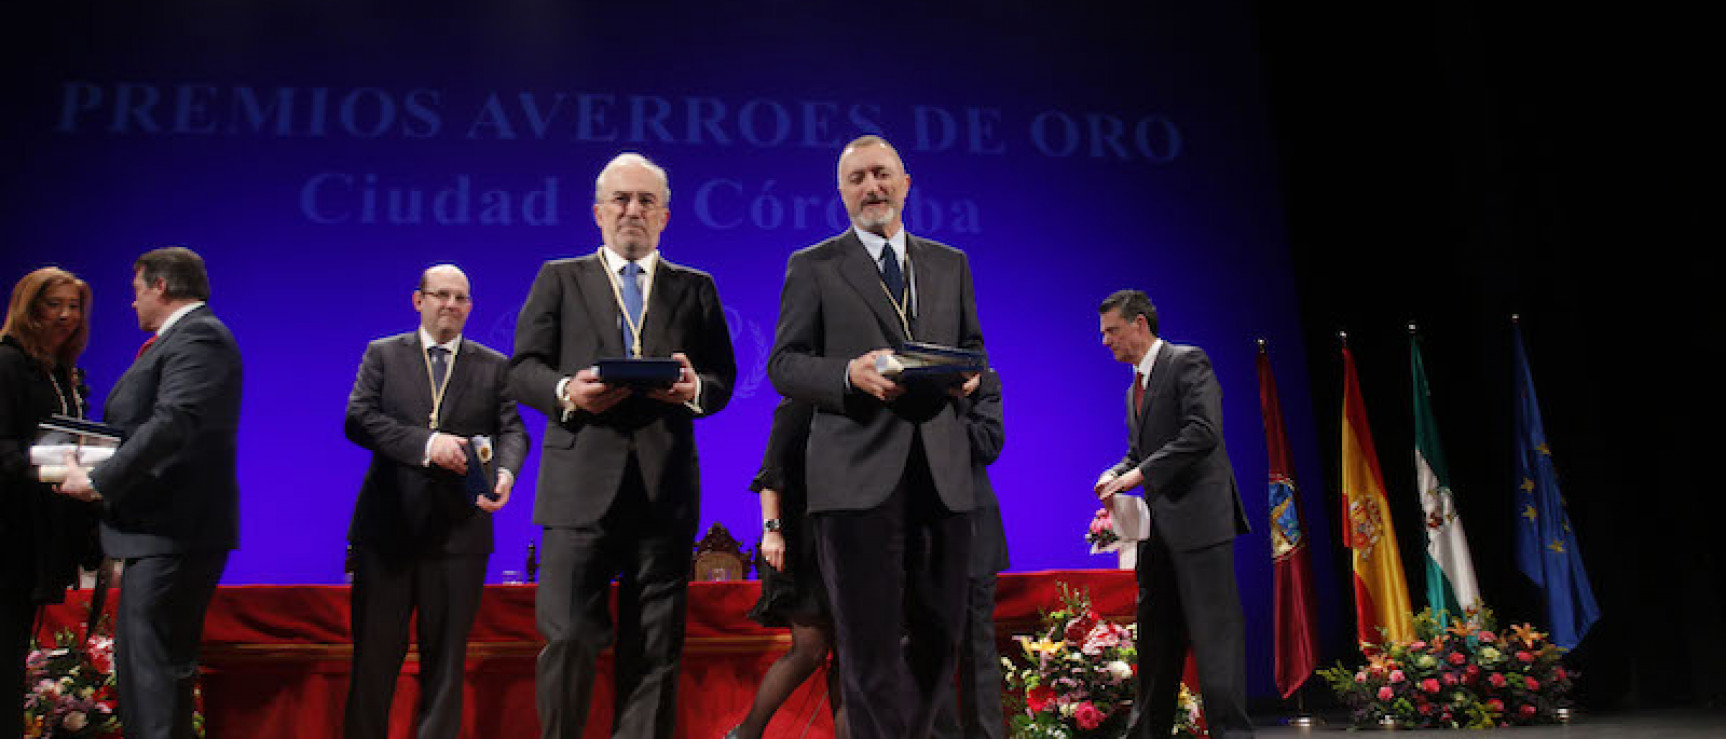 Santiago Muñoz Machado y Arturo Pérez-Reverte tras recoger los premios.